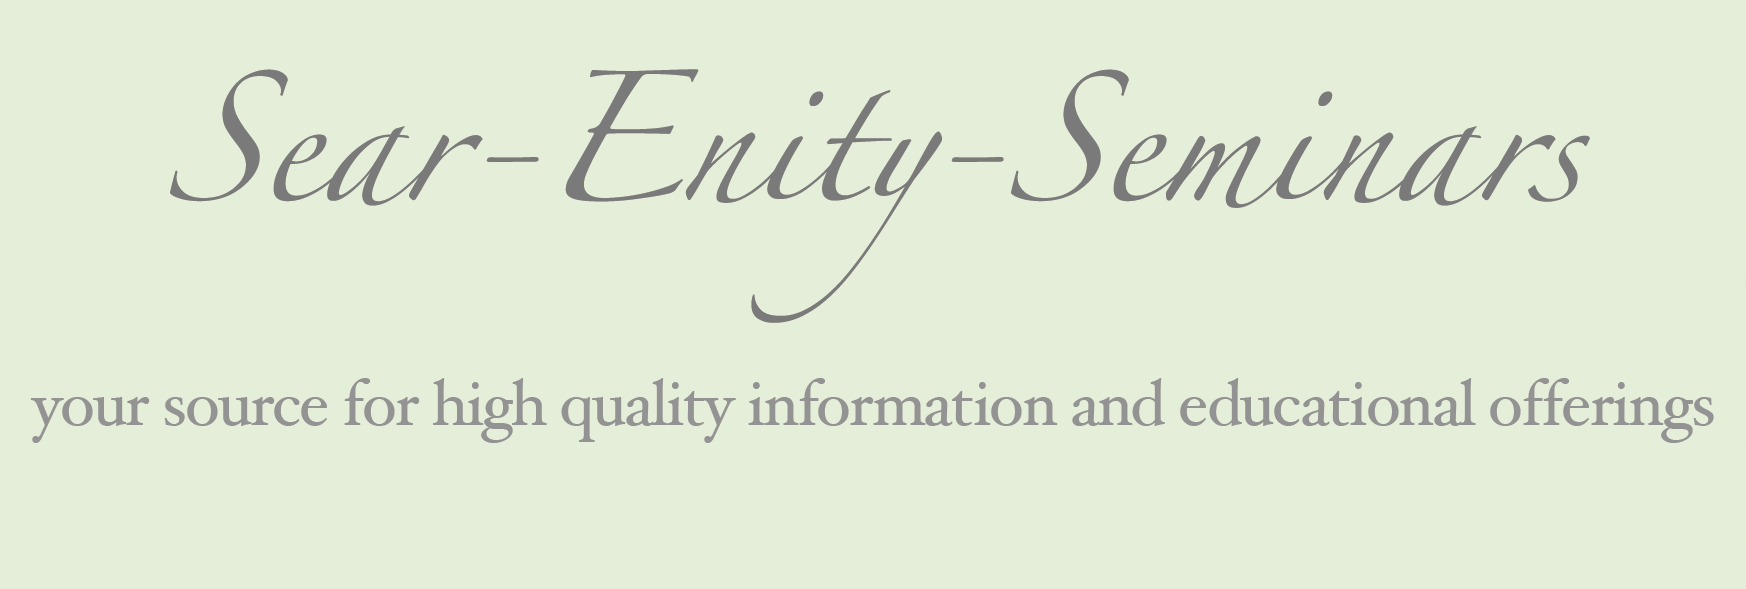 sear-enity-seminars-logo